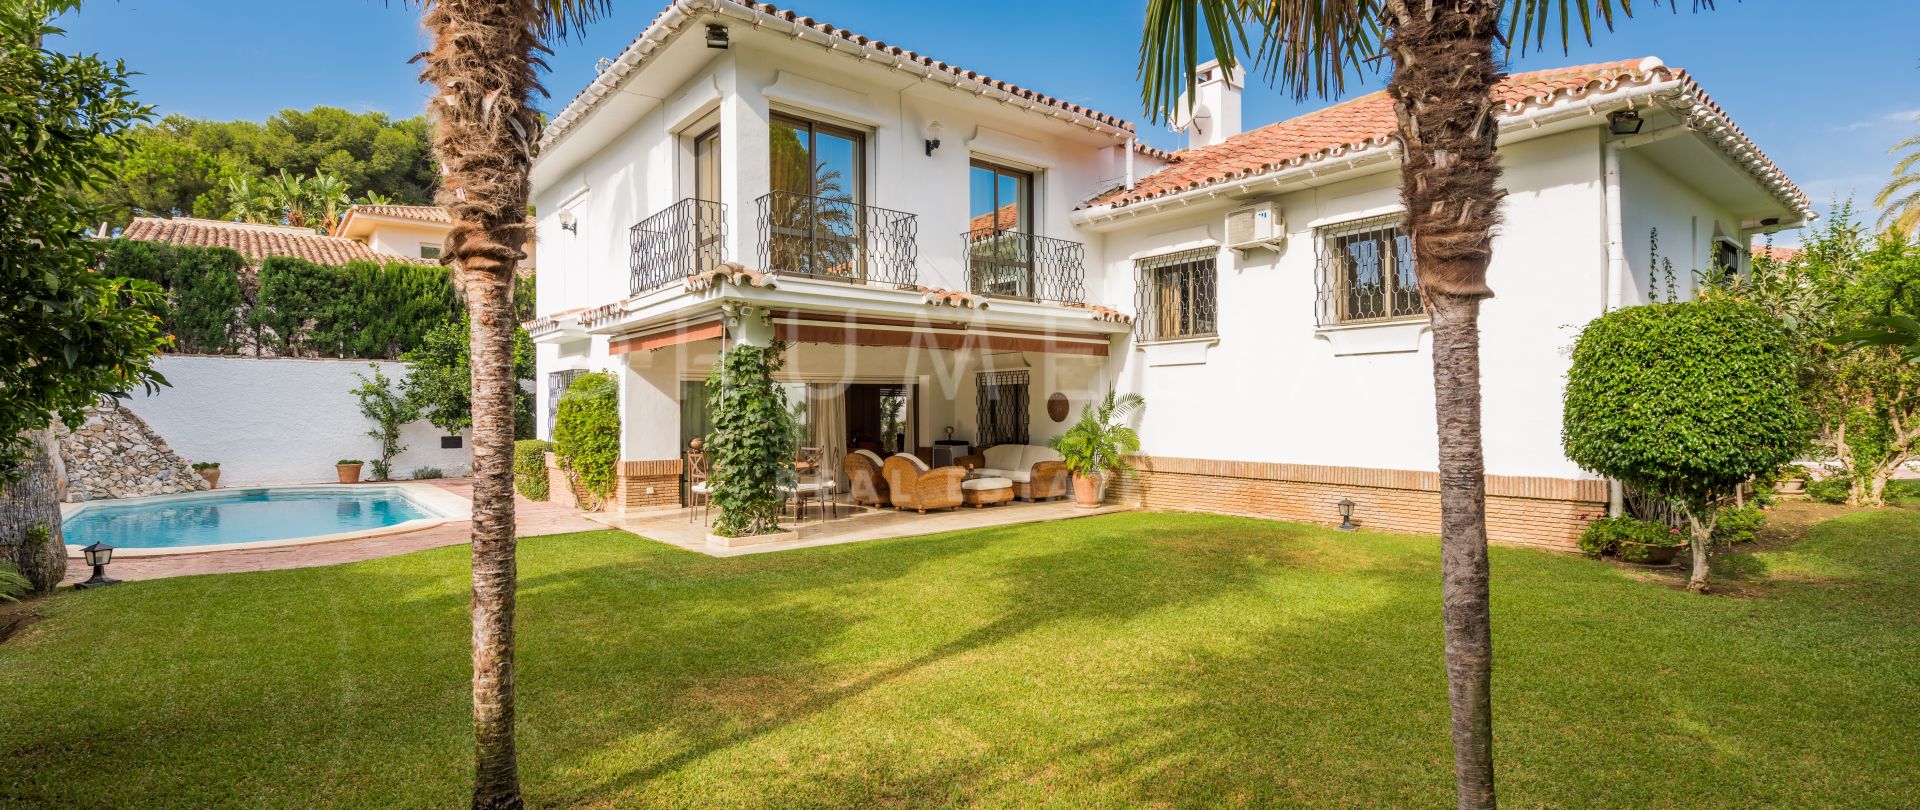 Prächtige mediterrane Luxus-Villa in Los Monteros, Marbella Ost